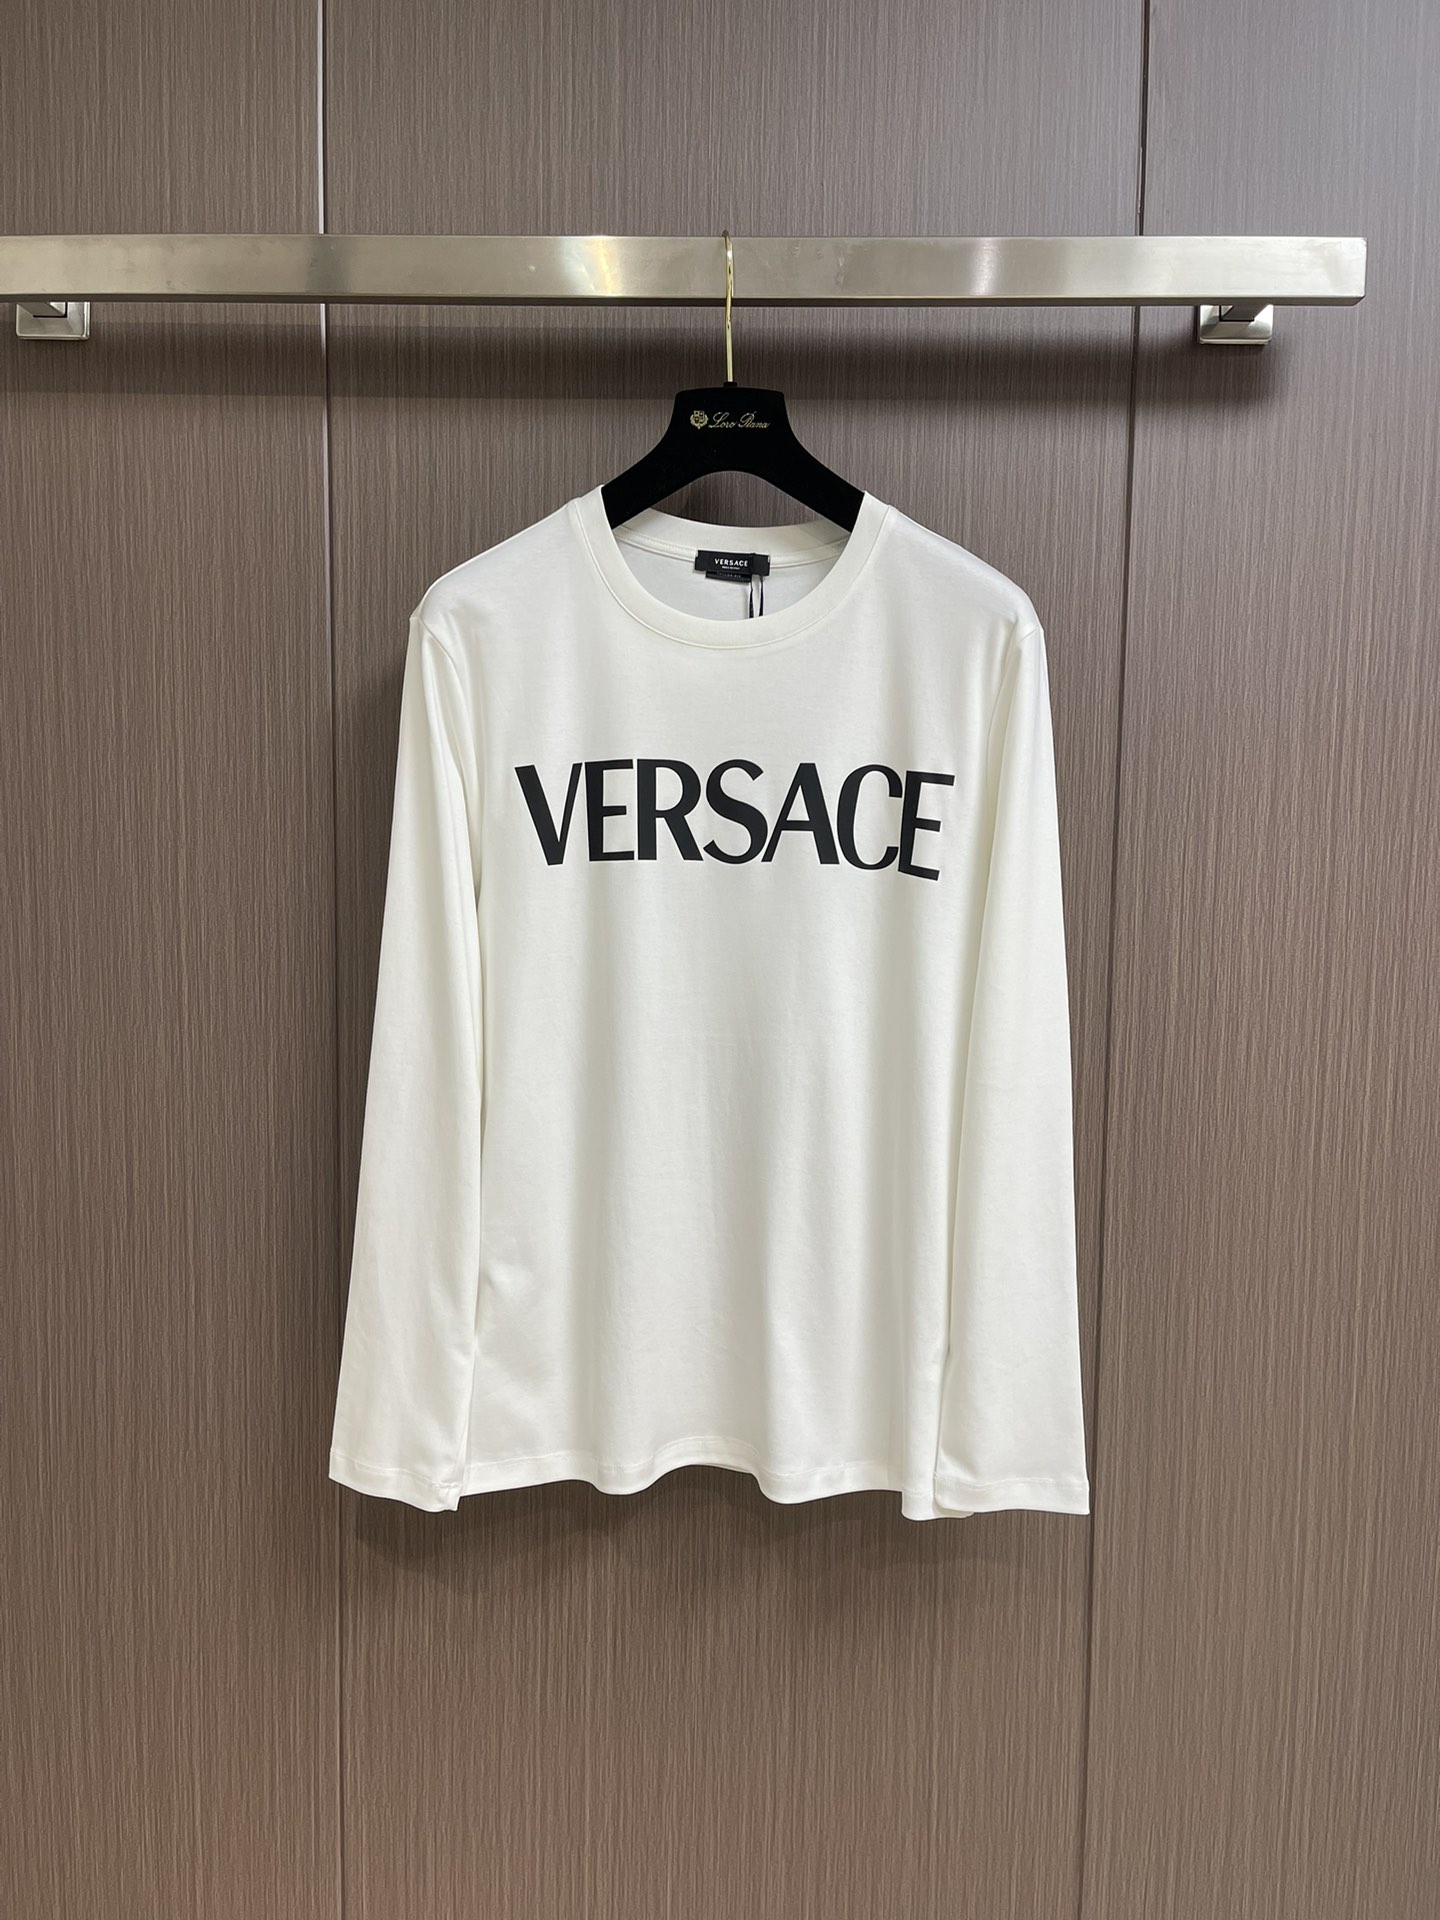 Versace Clothing Sweatshirts T-Shirt Printing Fall/Winter Collection Long Sleeve